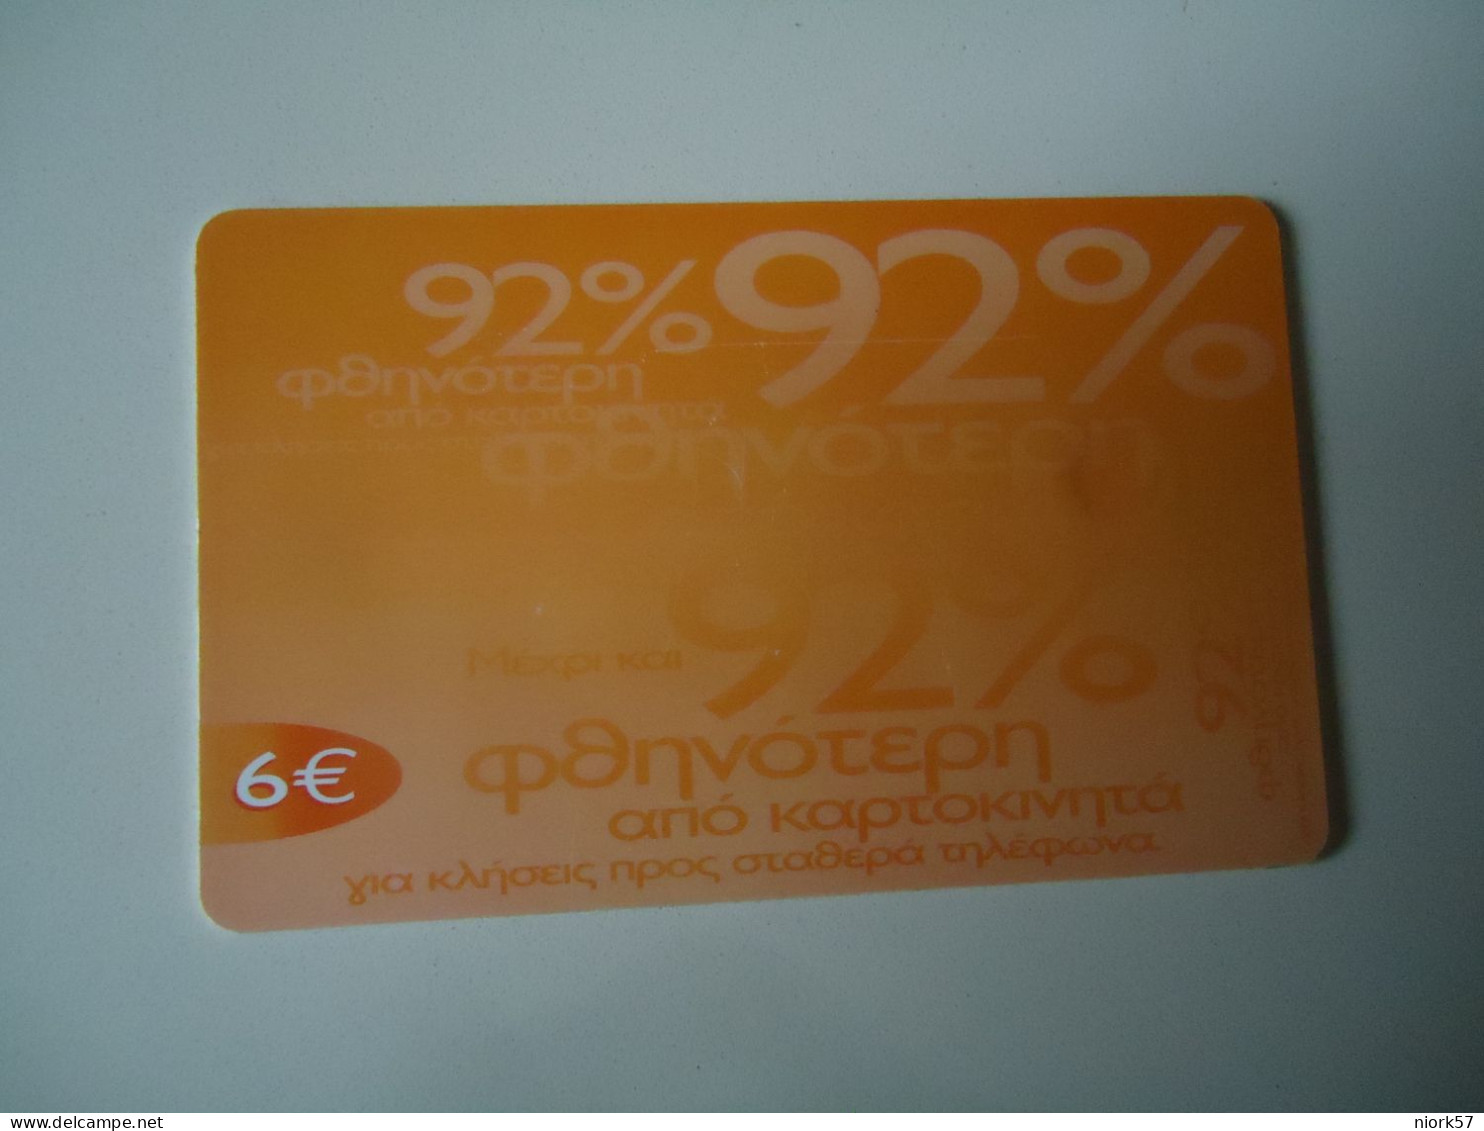 GREECE  USED CARDS  OTE 6  EYRO - Telekom-Betreiber